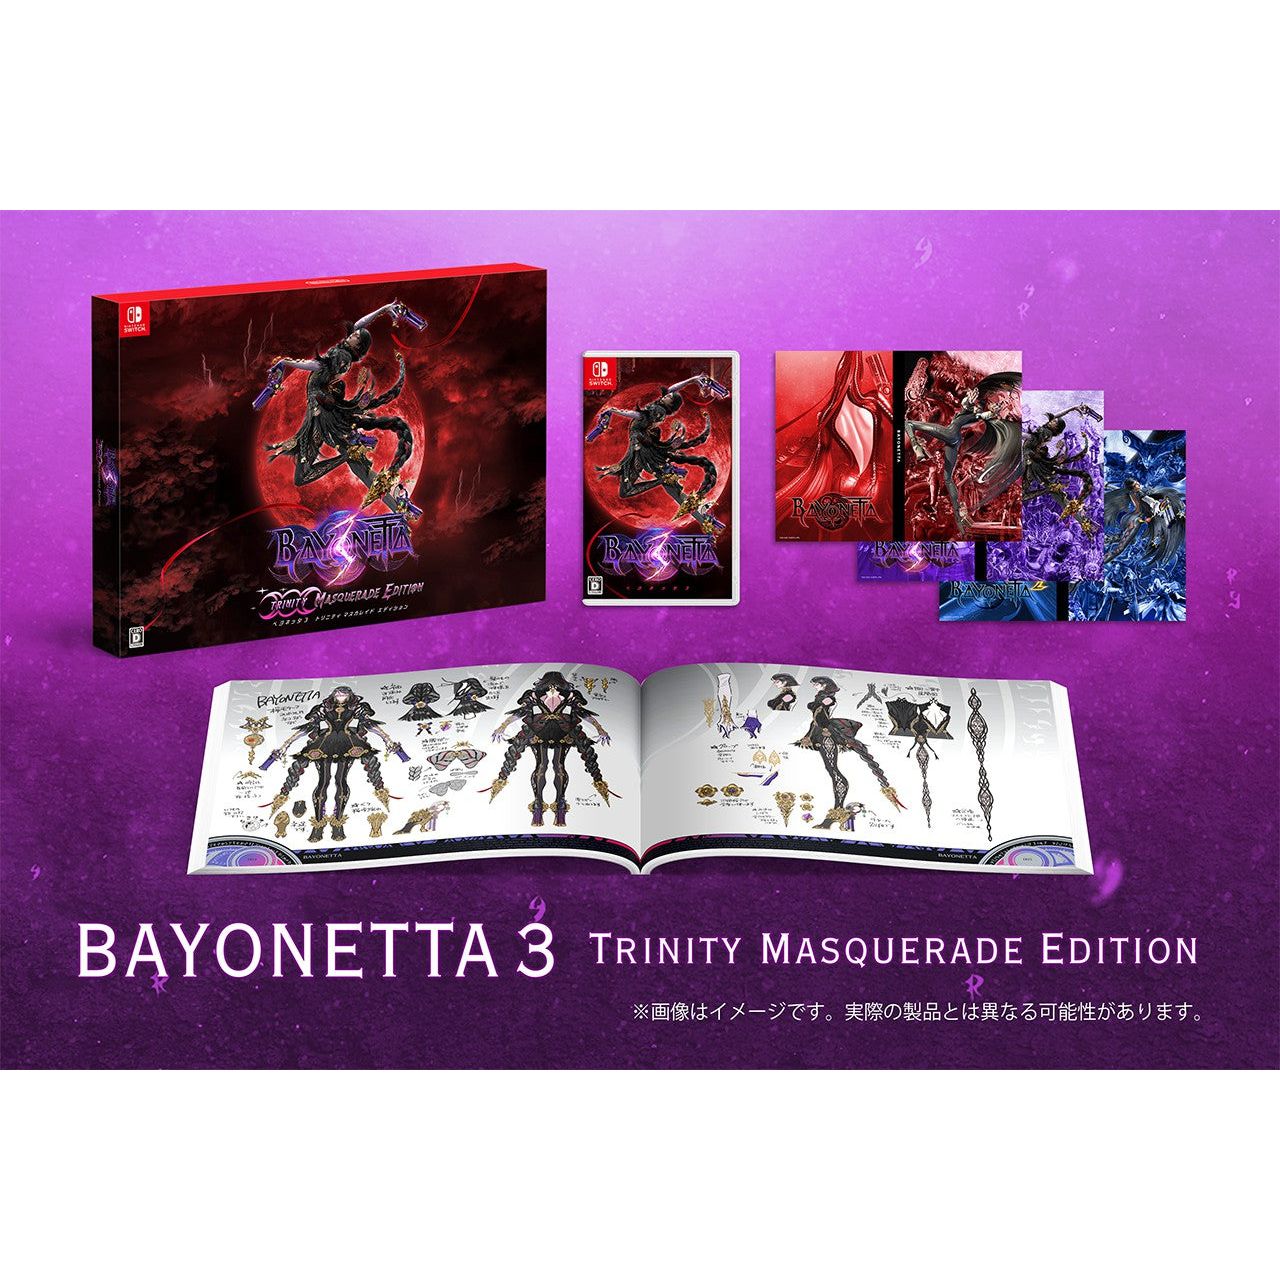 Bayonetta 3 Trinity Masquerade Edition NSW (Japan Import)